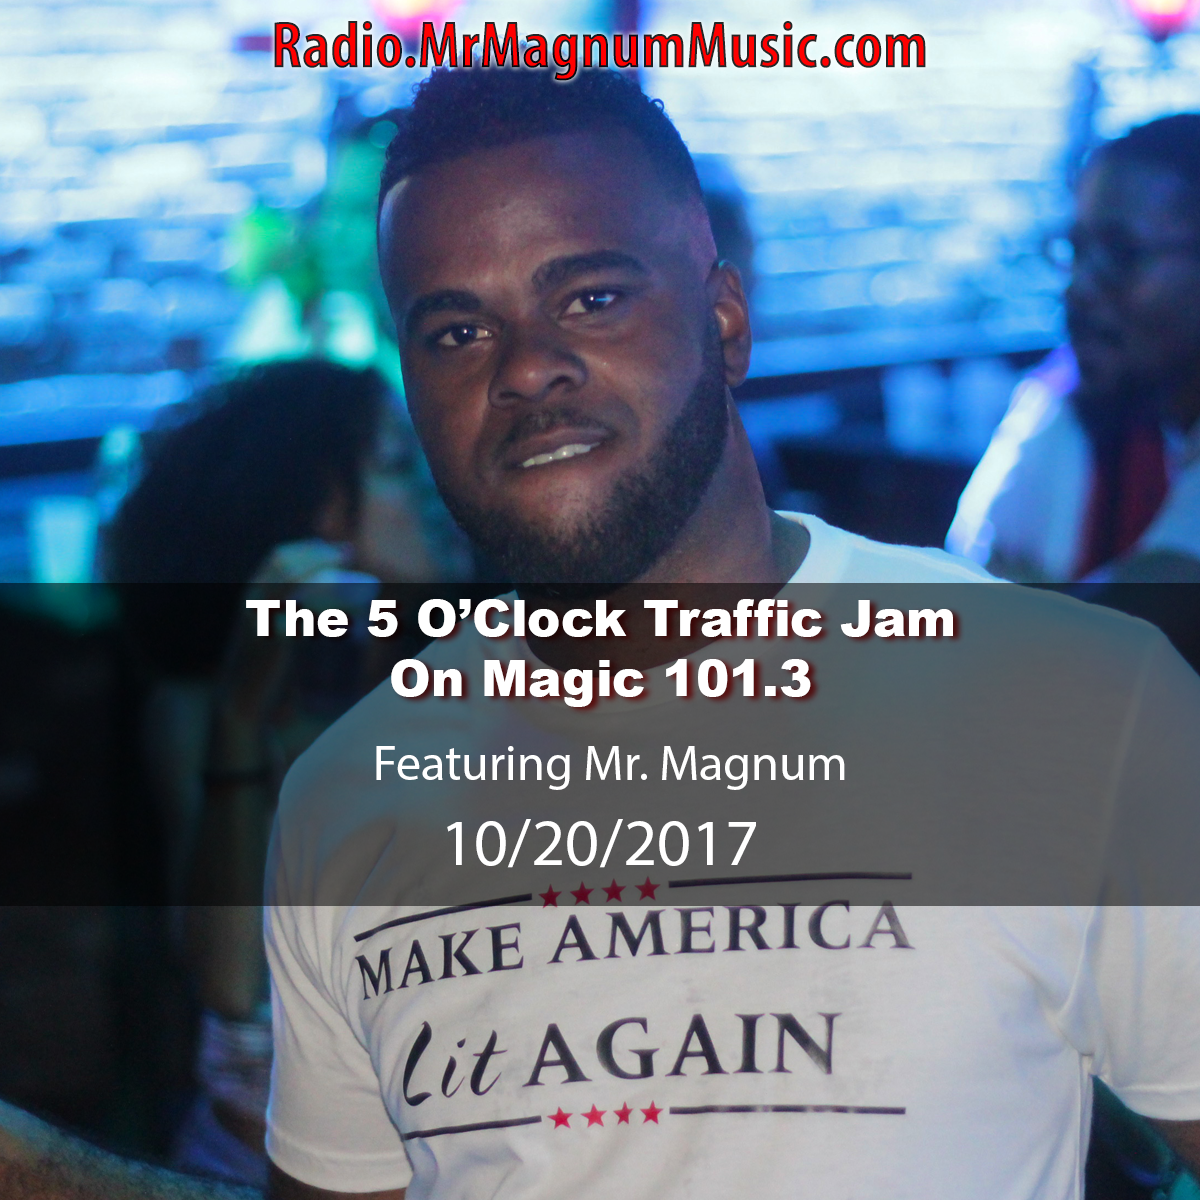 The 5 O'Clock Traffic Jam 20171020 featuring Gainesville's #1 DJ, Mr. Magnum on Magic 101.3